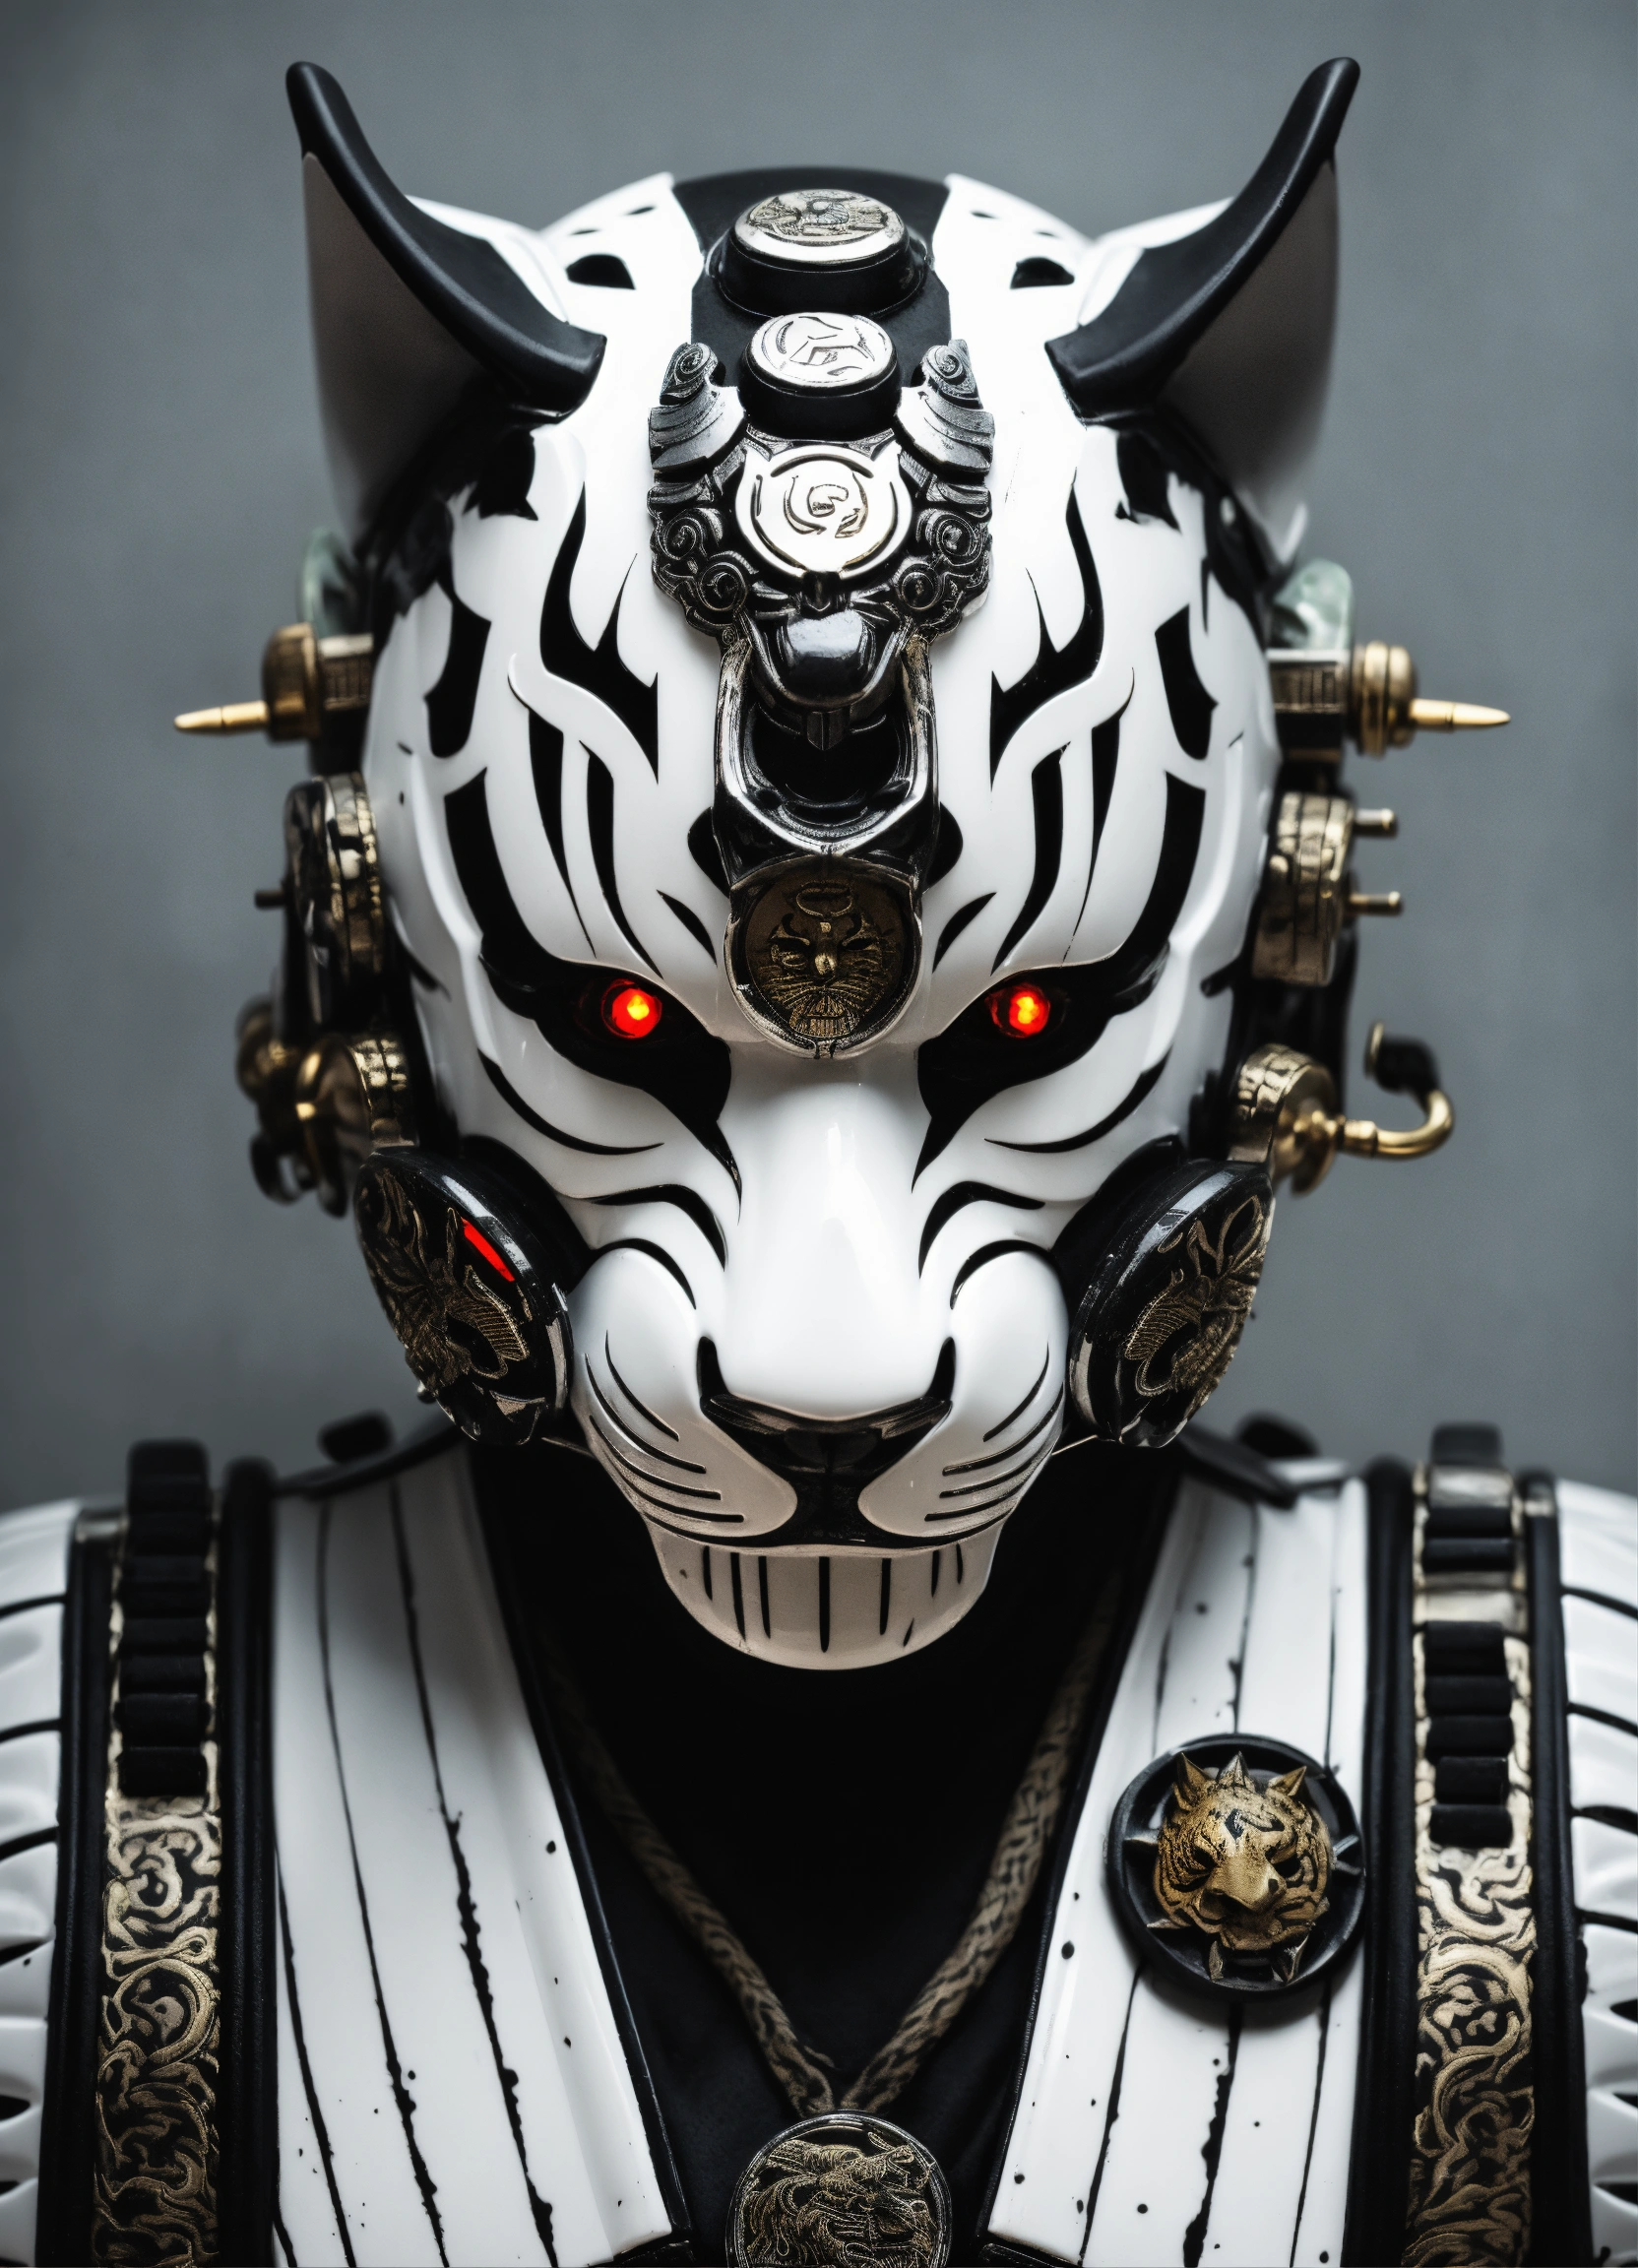 Lexica Cyberpunk Gas Samurai Tiger Mask White And Black Intricate Details 0094